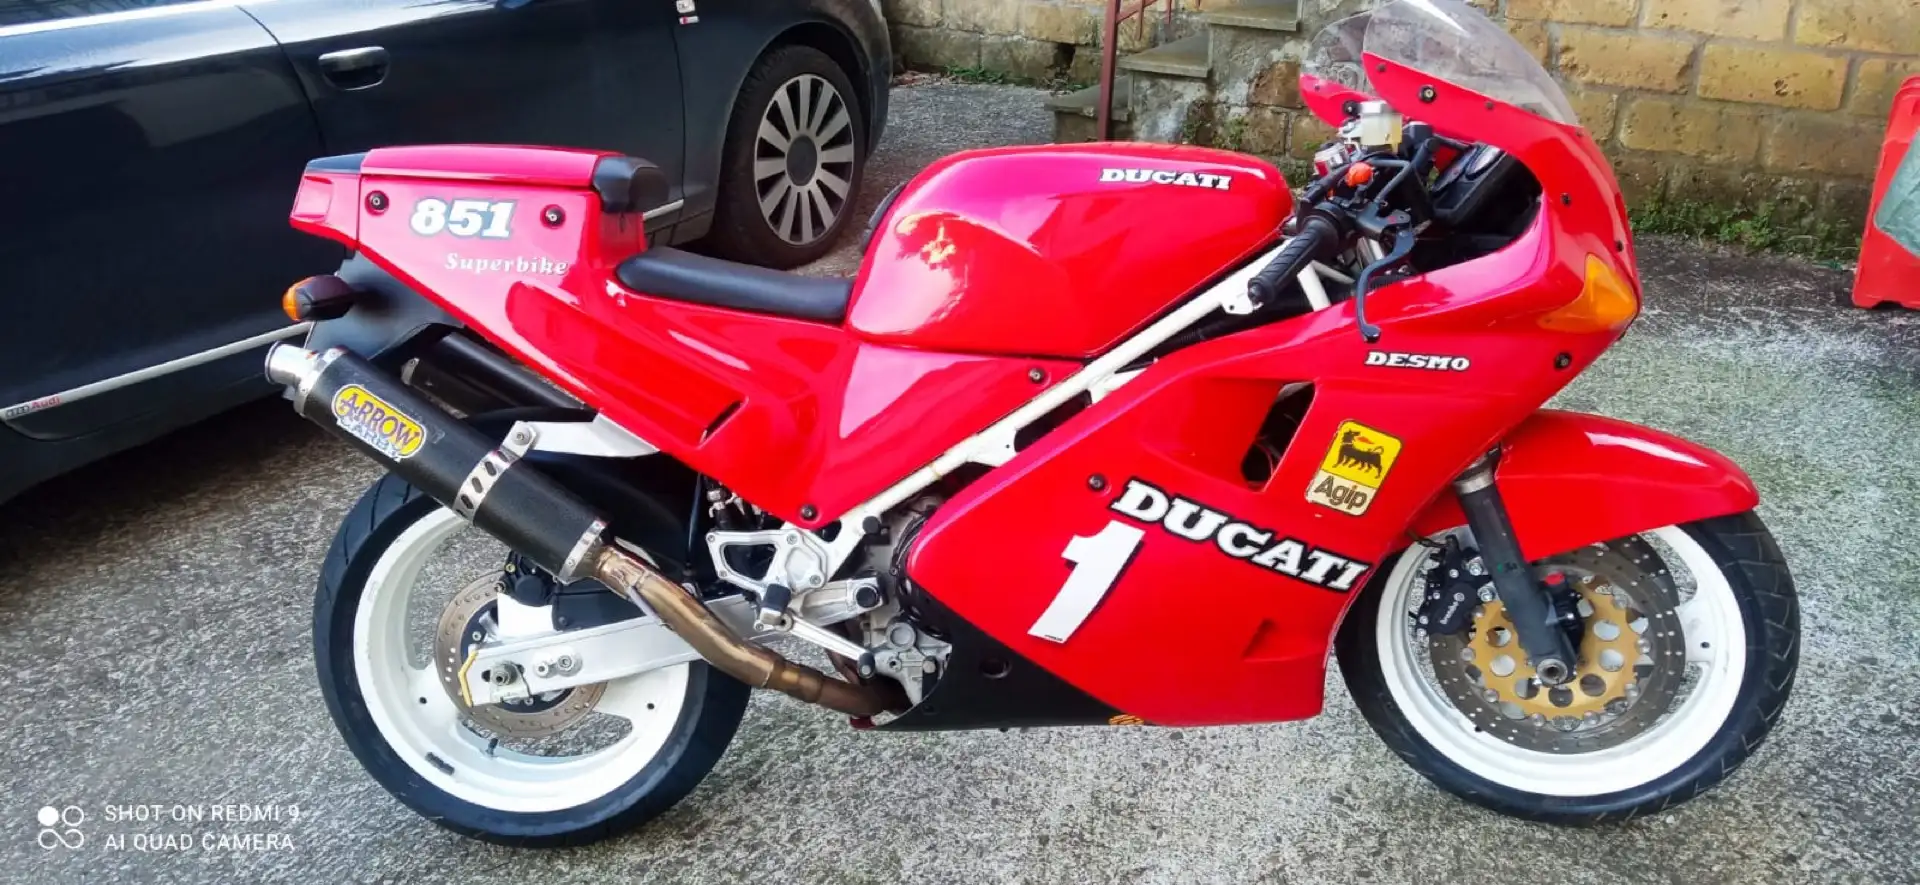 Ducati 851 superbike Rot - 2